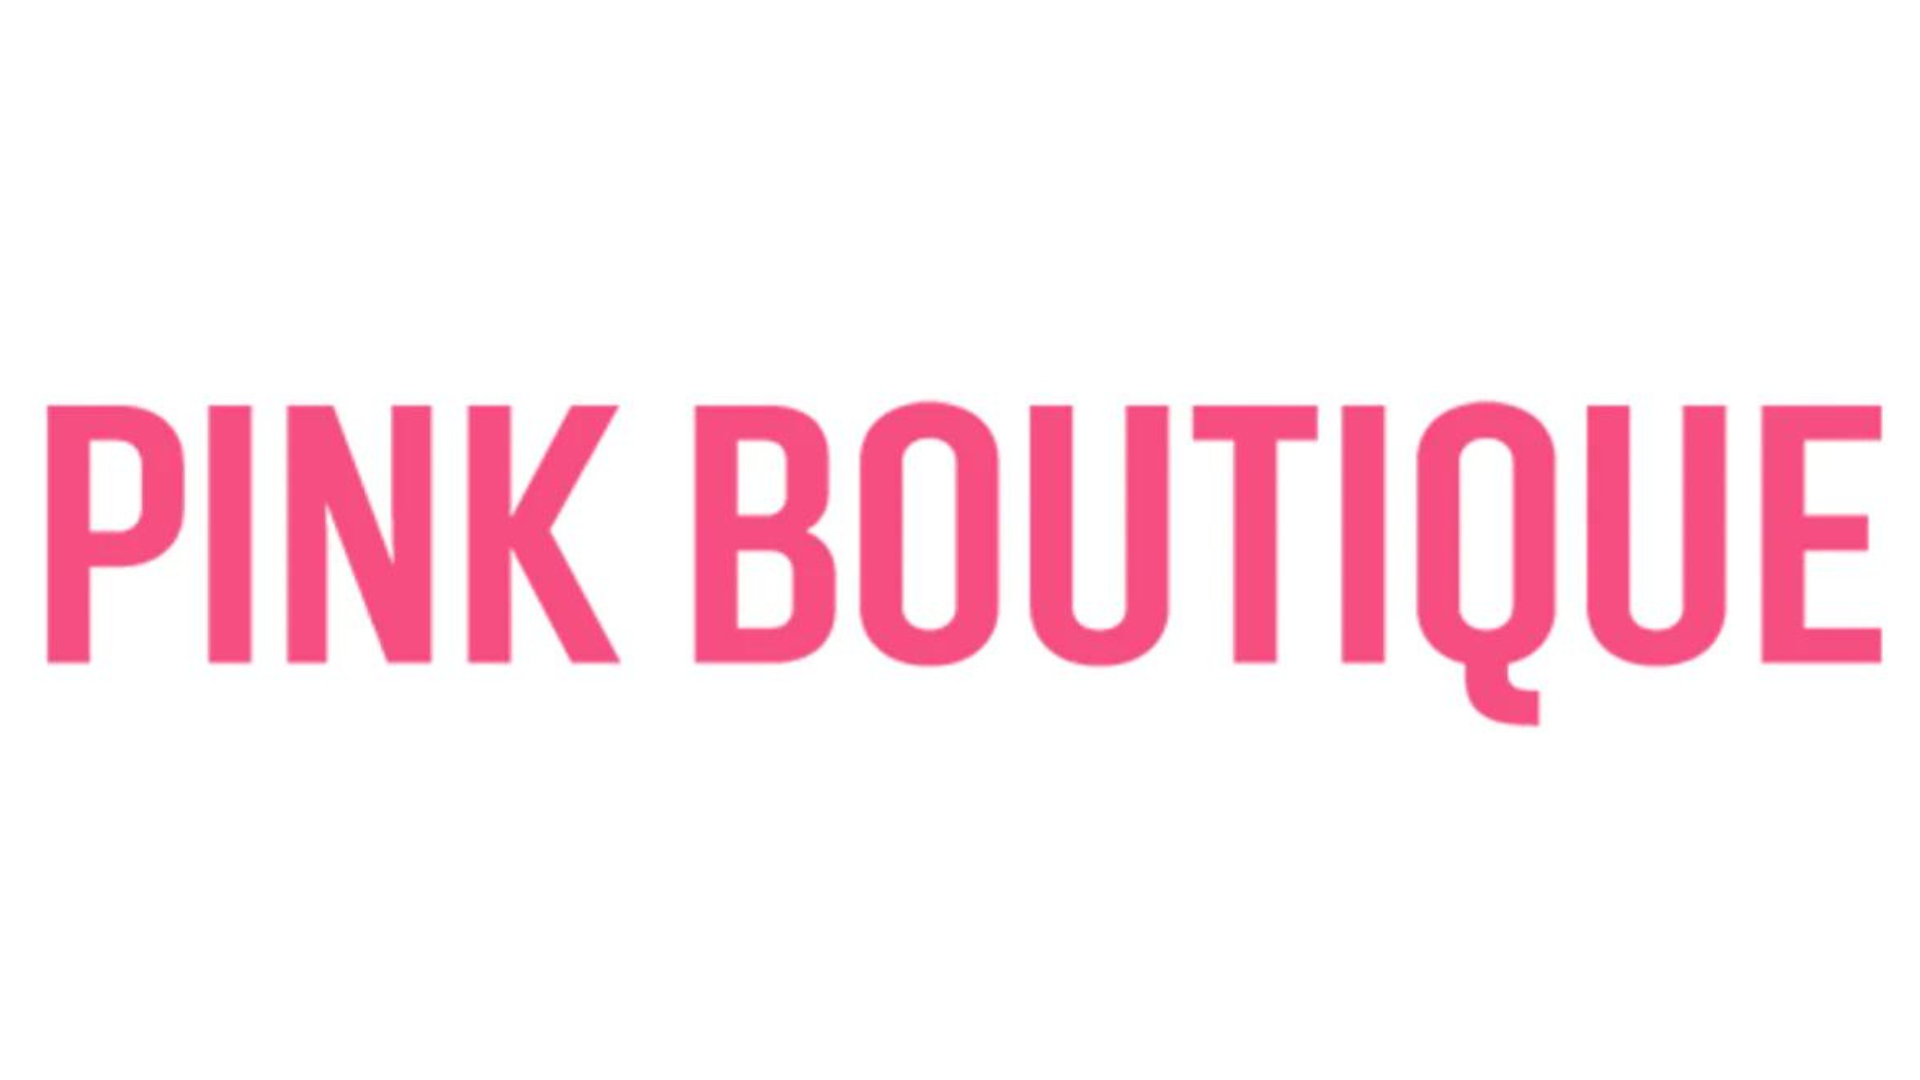 Pink Boutique logo